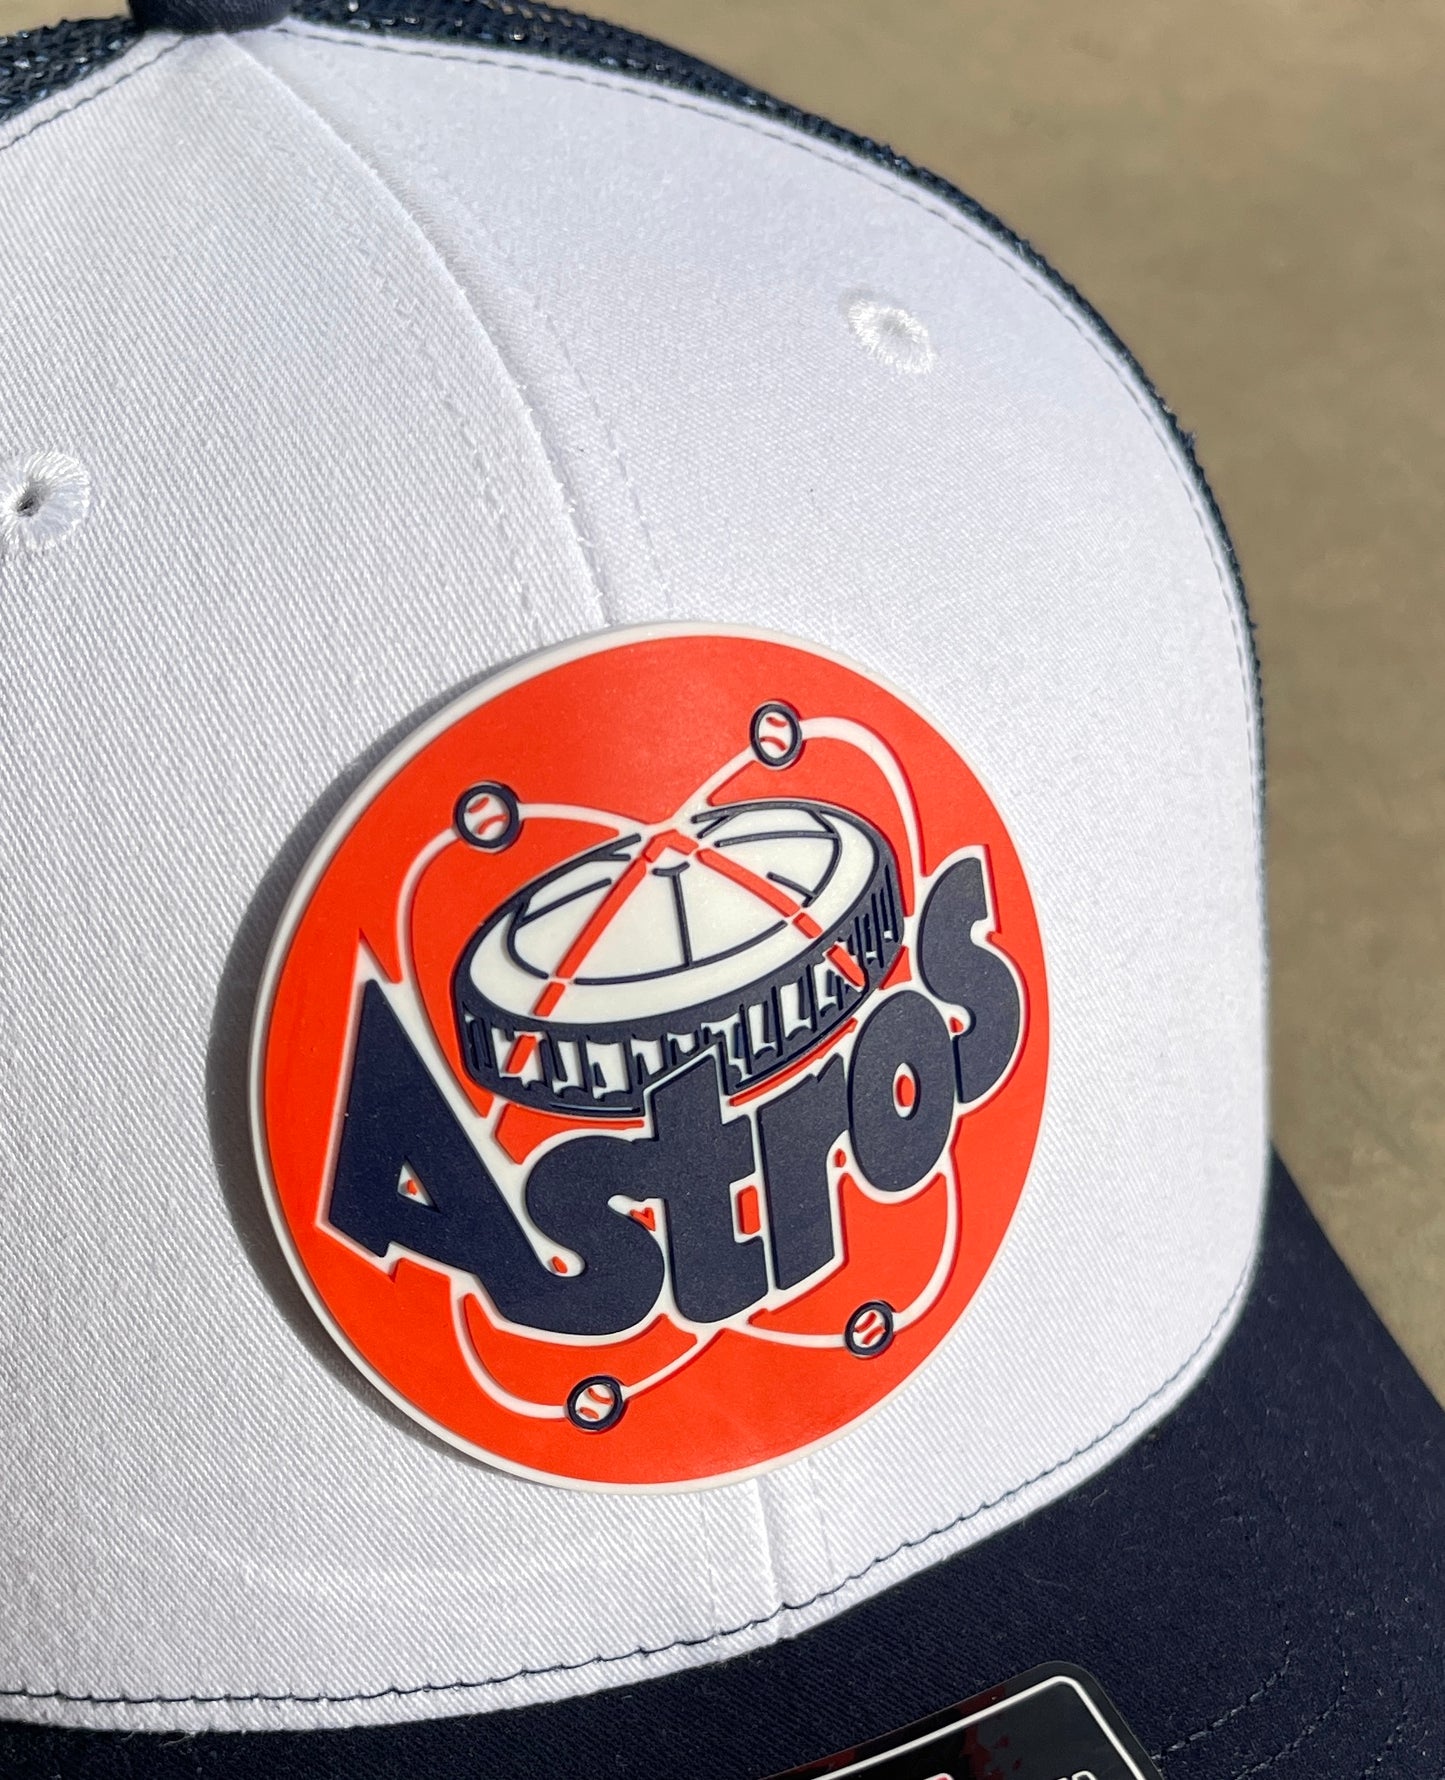 Astros Retro Astrodome 3D PVC Patch Wool Blend Flat Bill Hat- Charcoal/ White - Ten Gallon Hat Co.